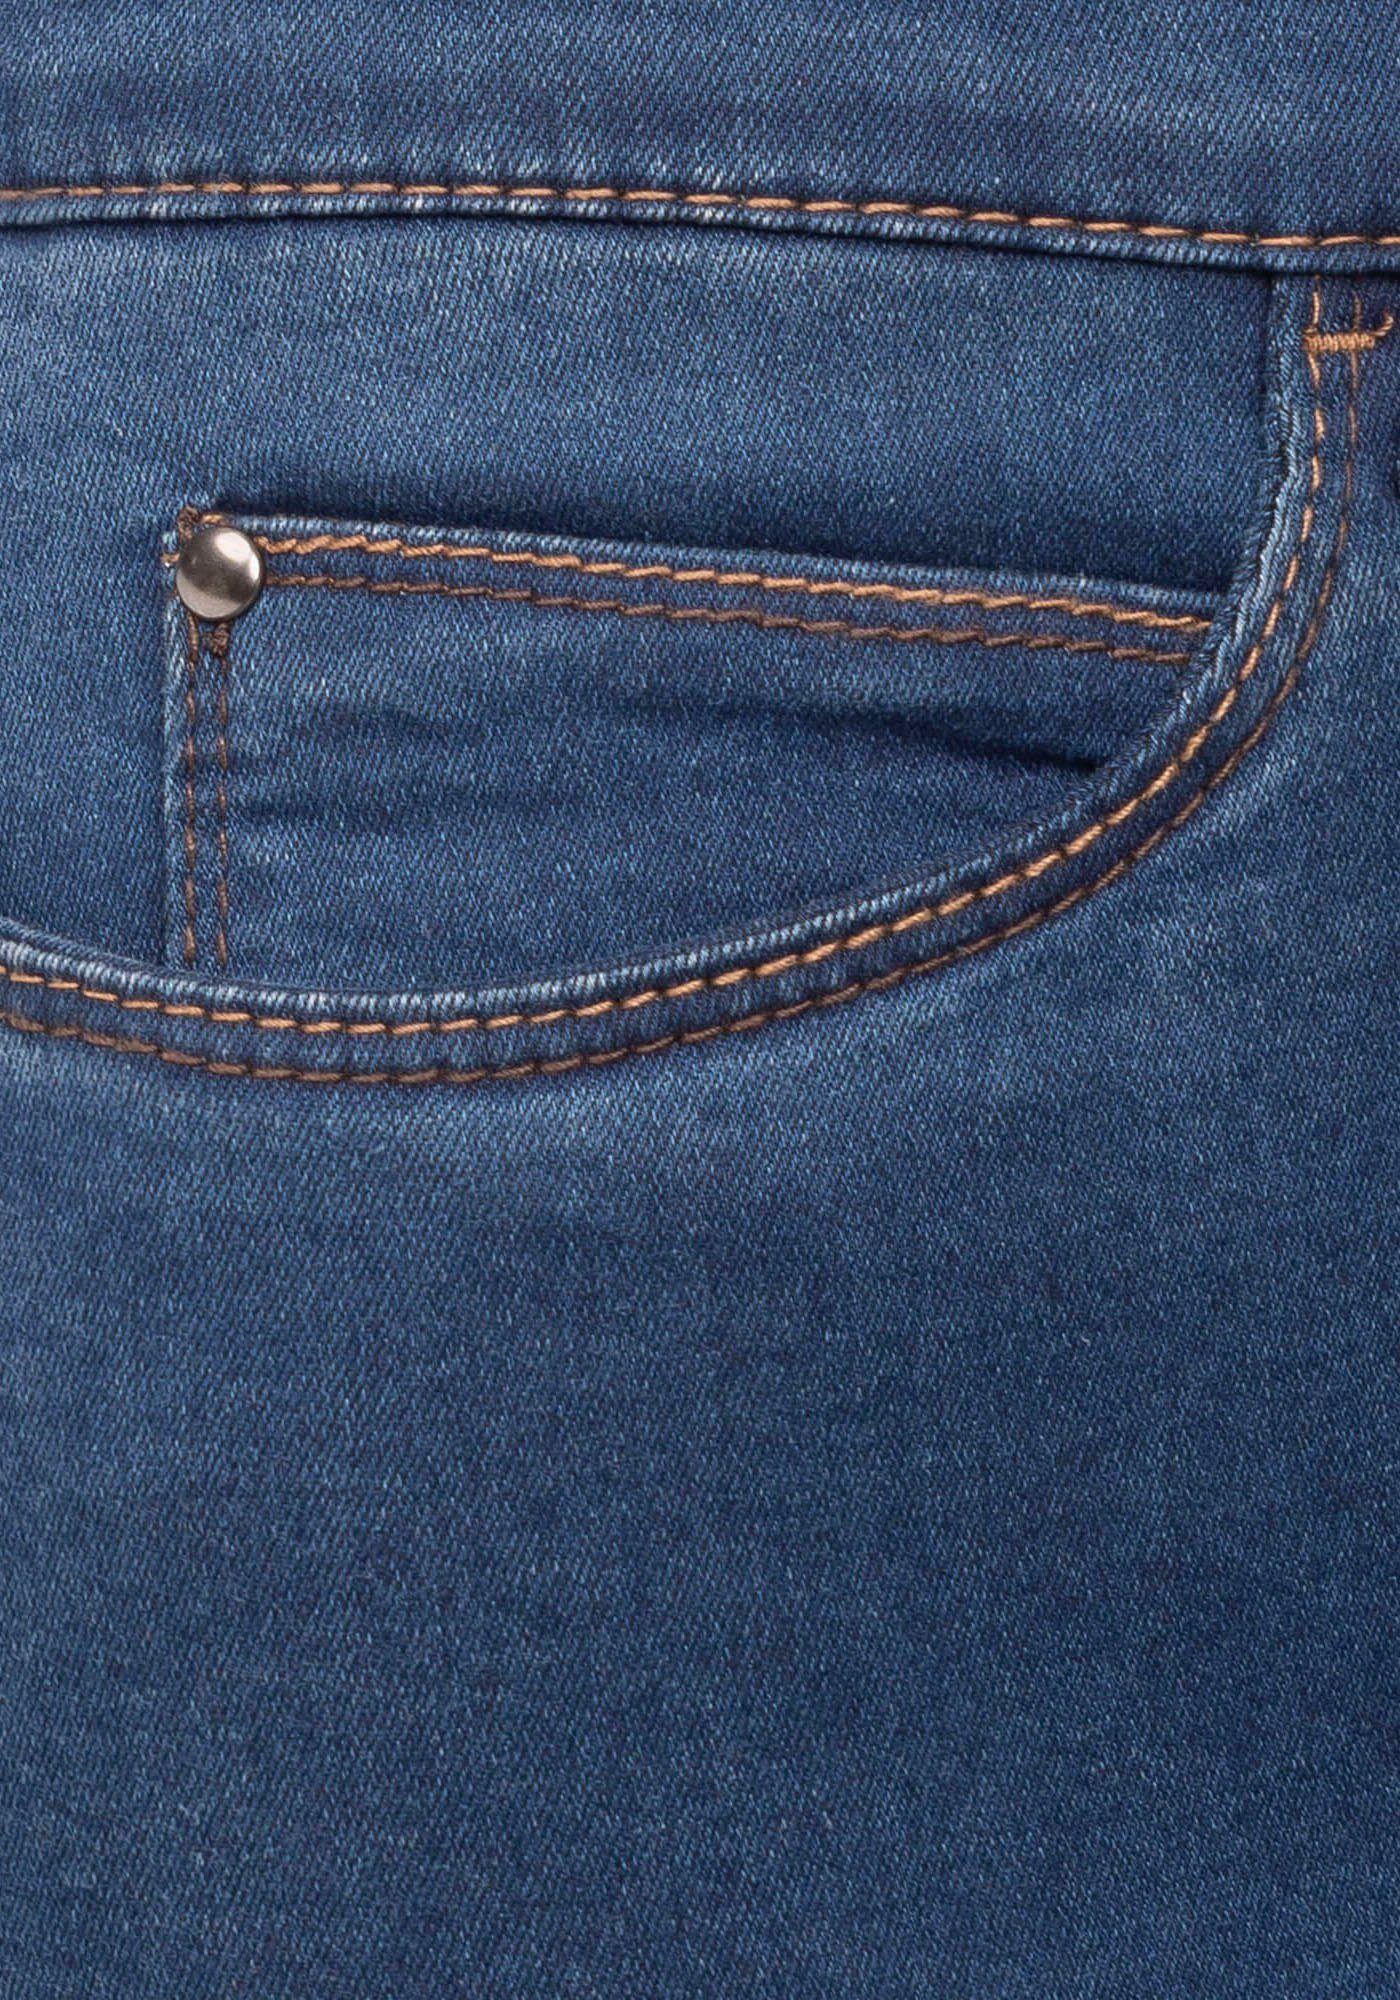 Schnitt washed wonderjeans Slim-fit-Jeans blue stone Klassischer Classic-Slim gerader